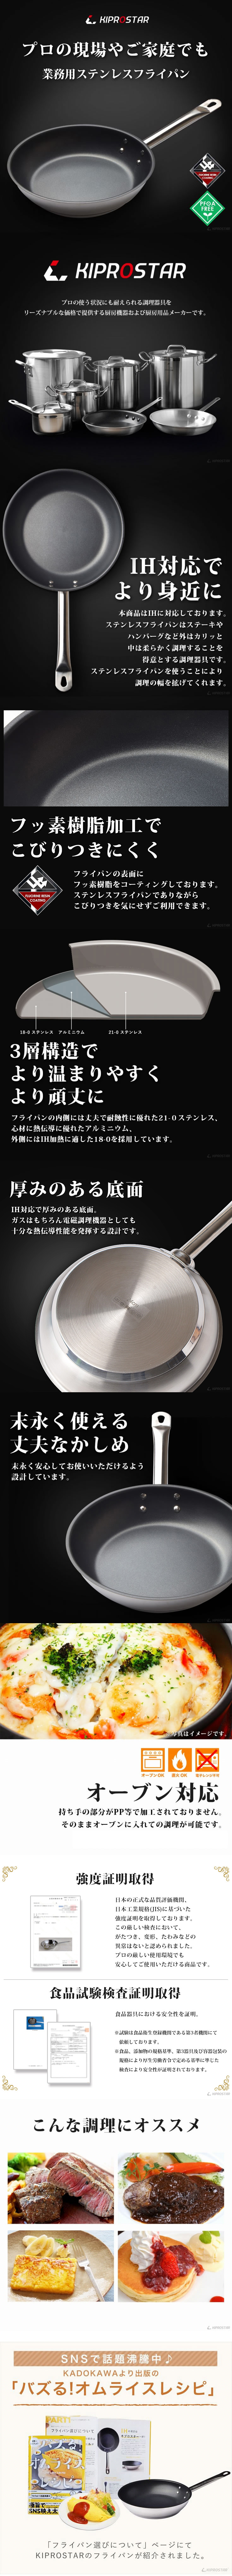 KIPROSTAR 業務用 IHフライパン(表面フッ素樹脂コーティング加工) 24cm ステンレスフライパン IH対応 厨房機器 